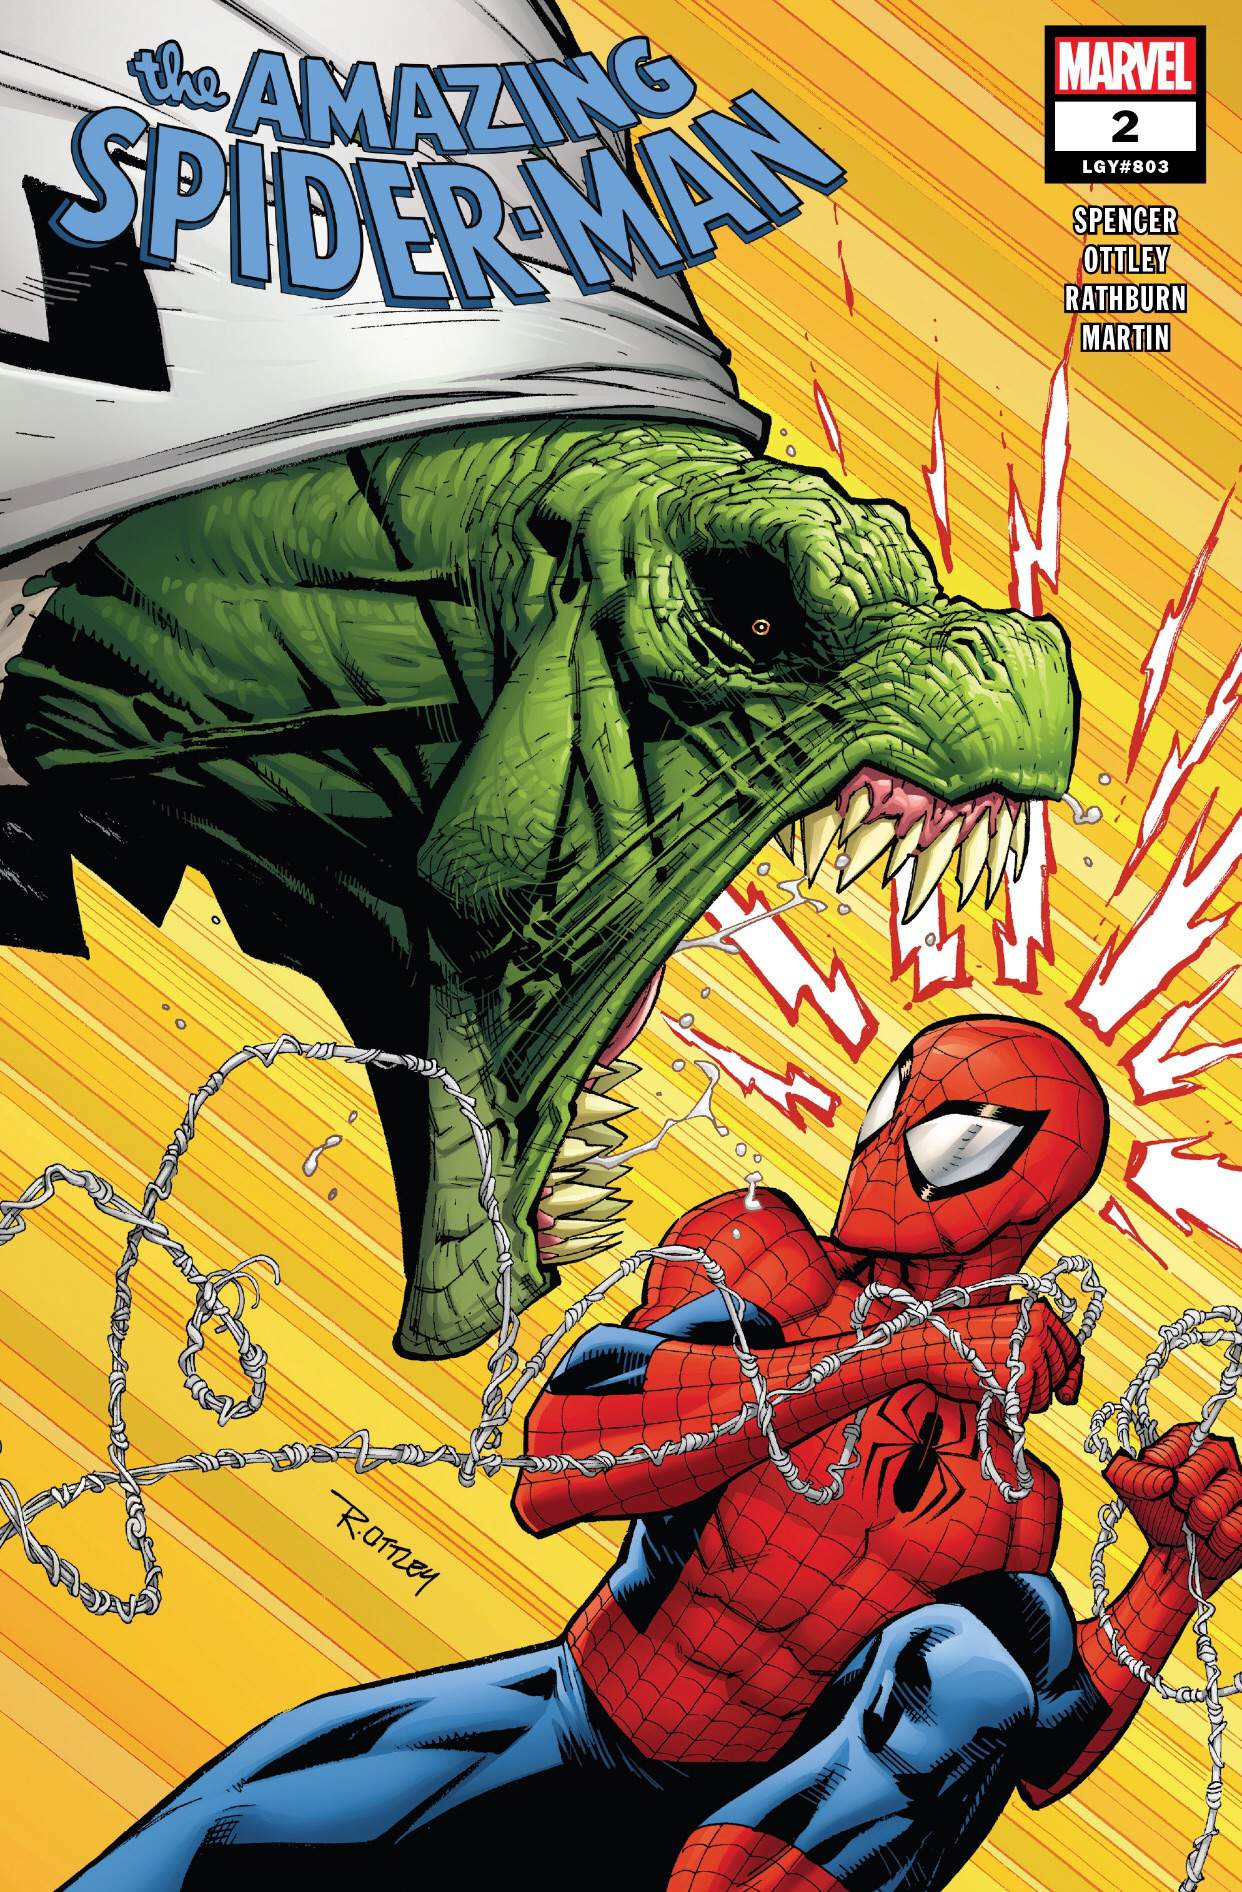 Amazing Spider-Man # 2 ( LGY # 803) Review | Comics Amino